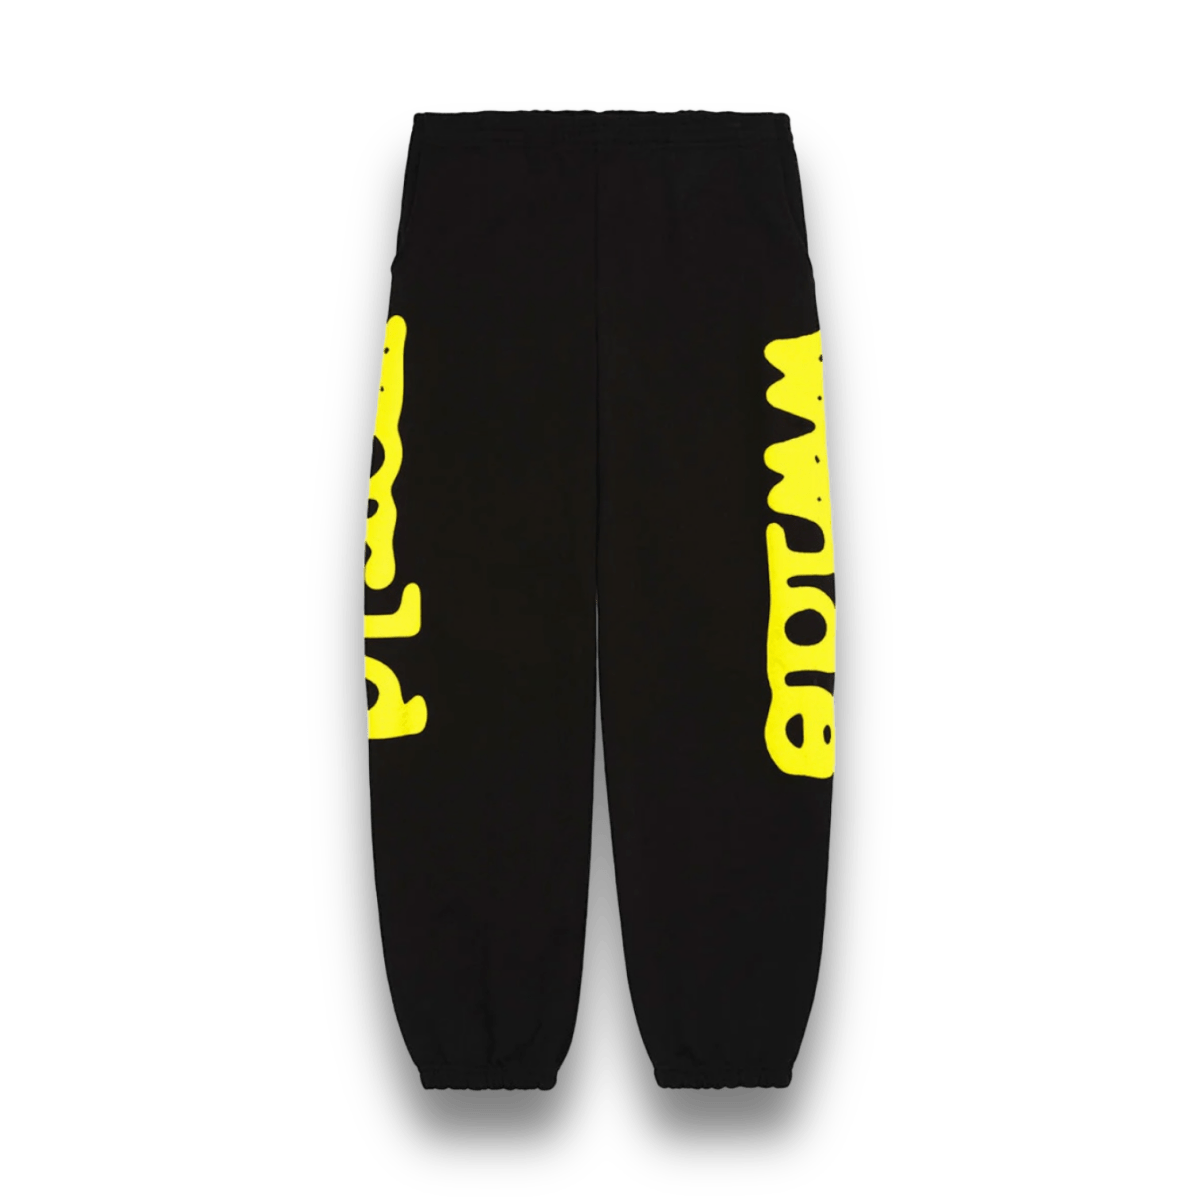 Sp5der Sweat Pants 'Beluga' Black & Yellow - Sweatpants - Jawns on Fire Sneakers & Streetwear